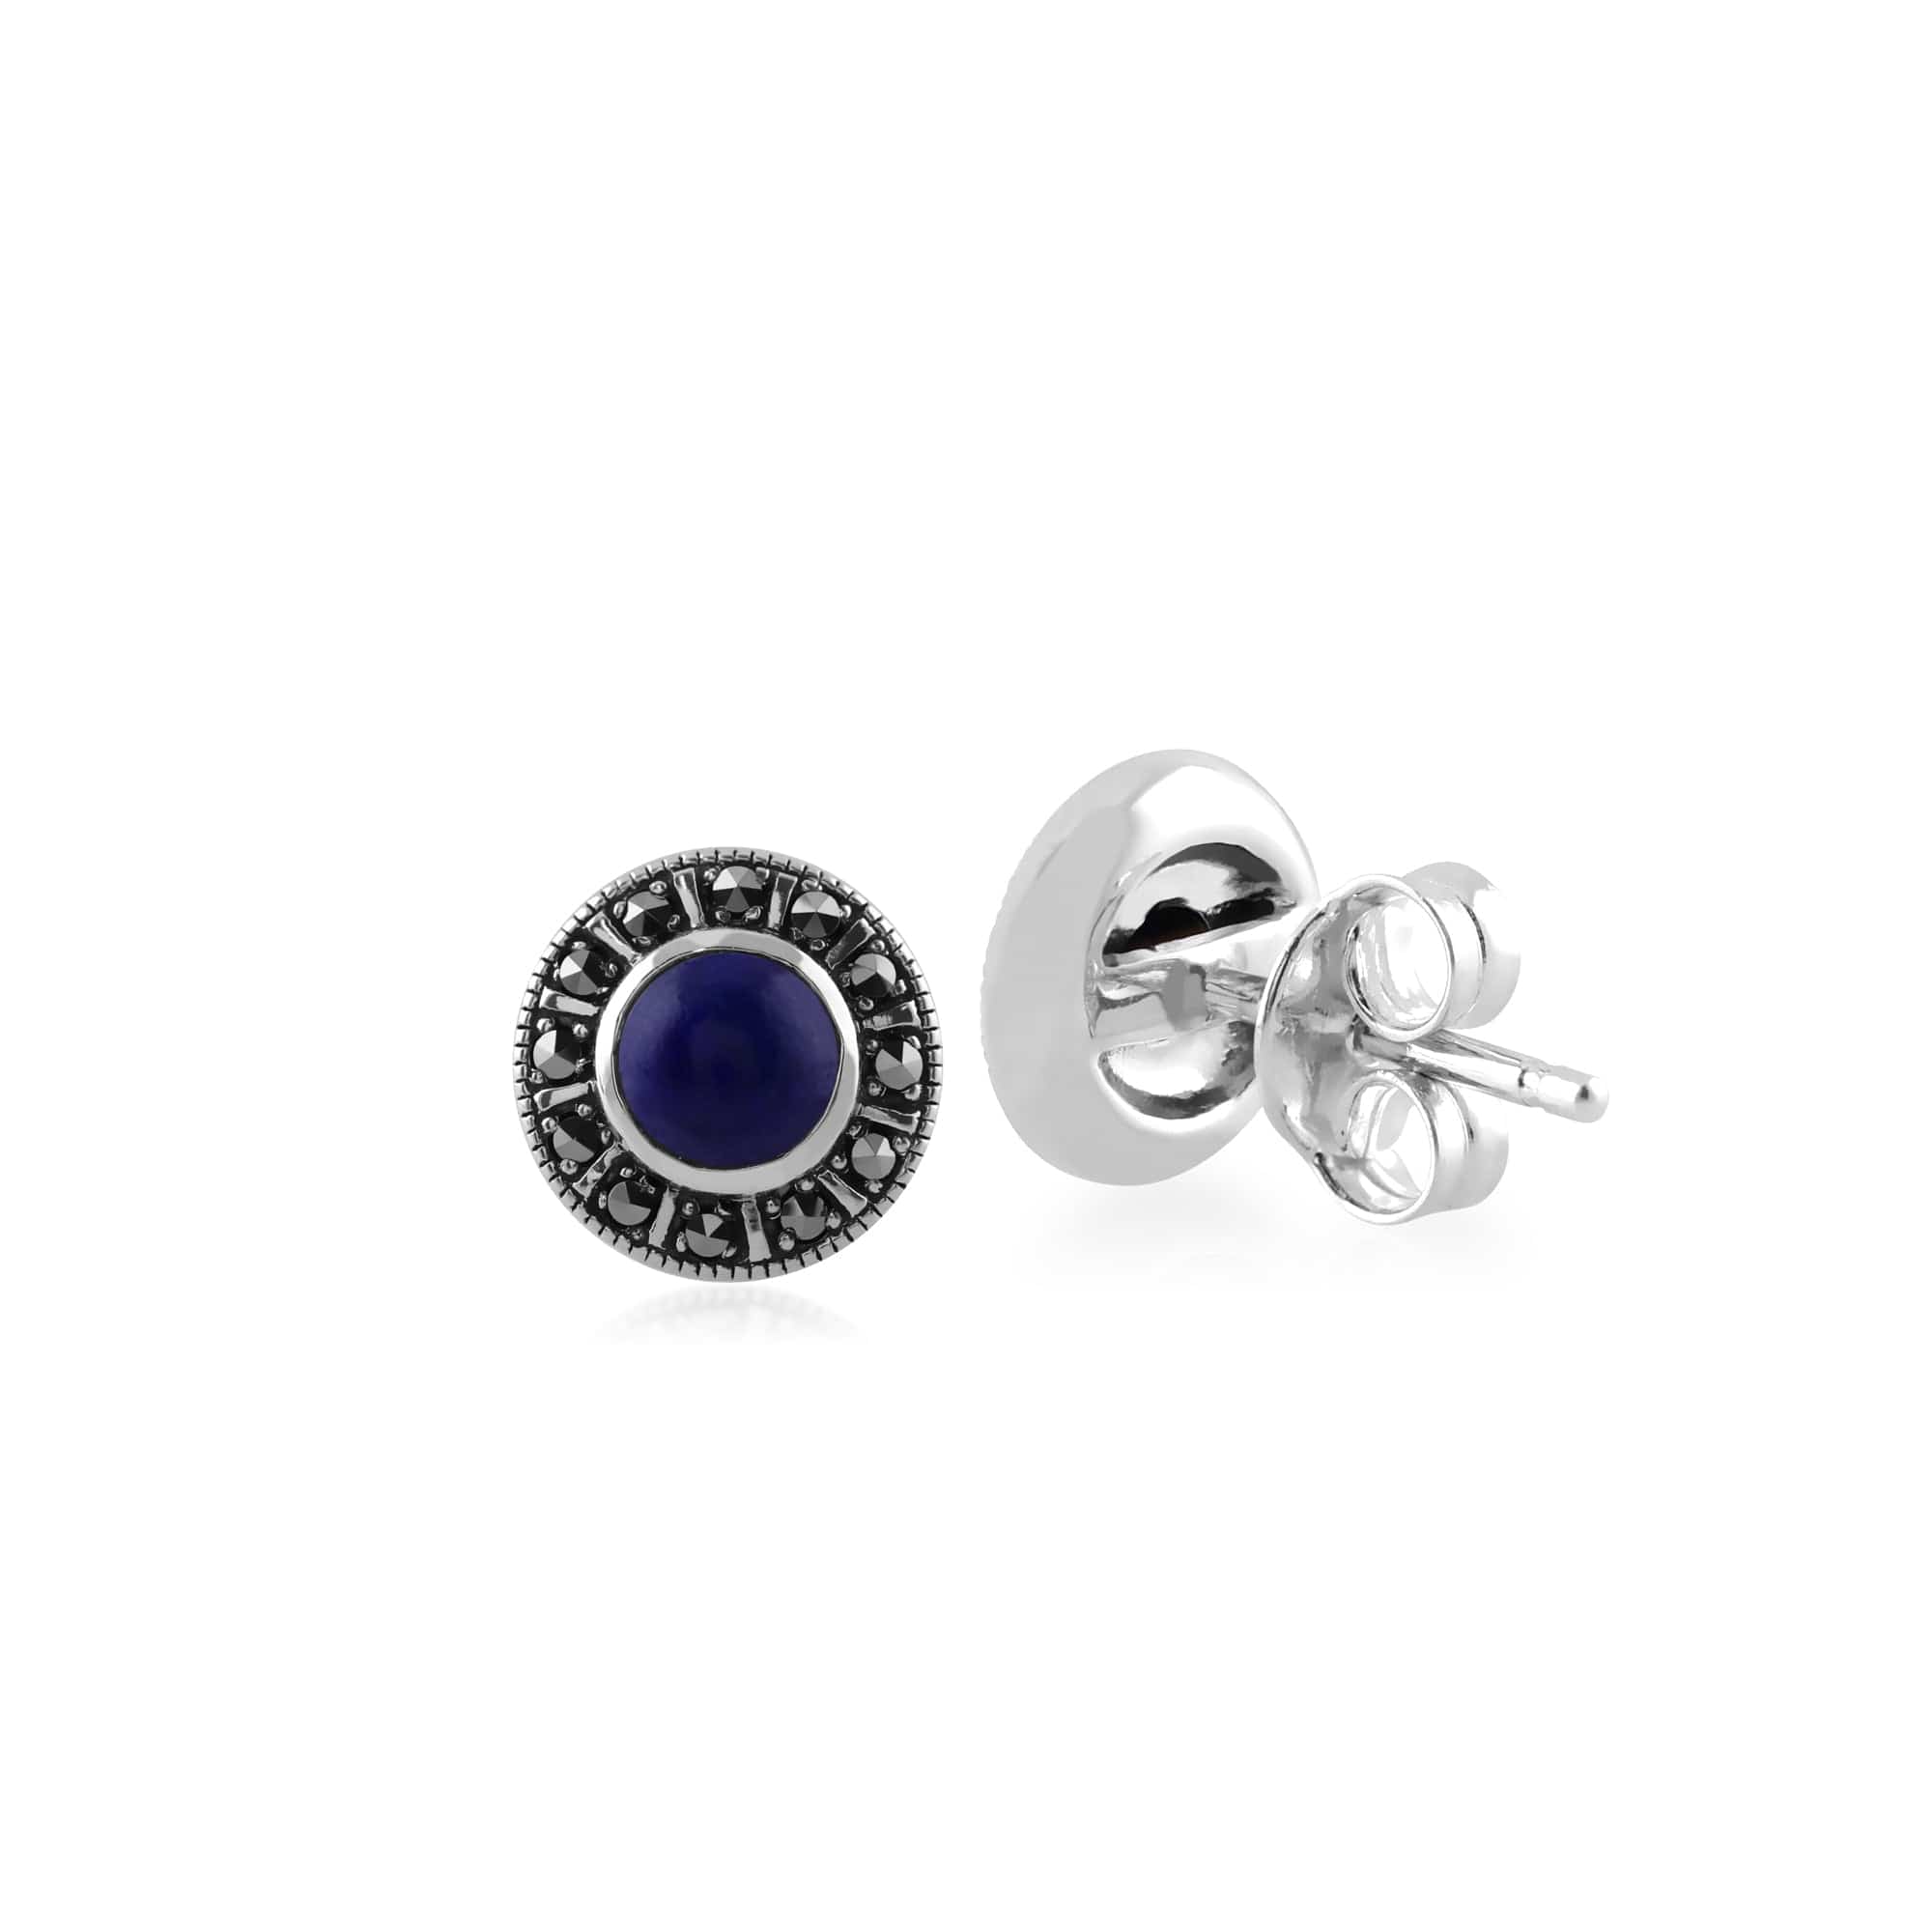 Art Deco Style Round Lapis Lazuli & Marcasite Halo Stud Earrings in 925 Sterling Silver - Gemondo